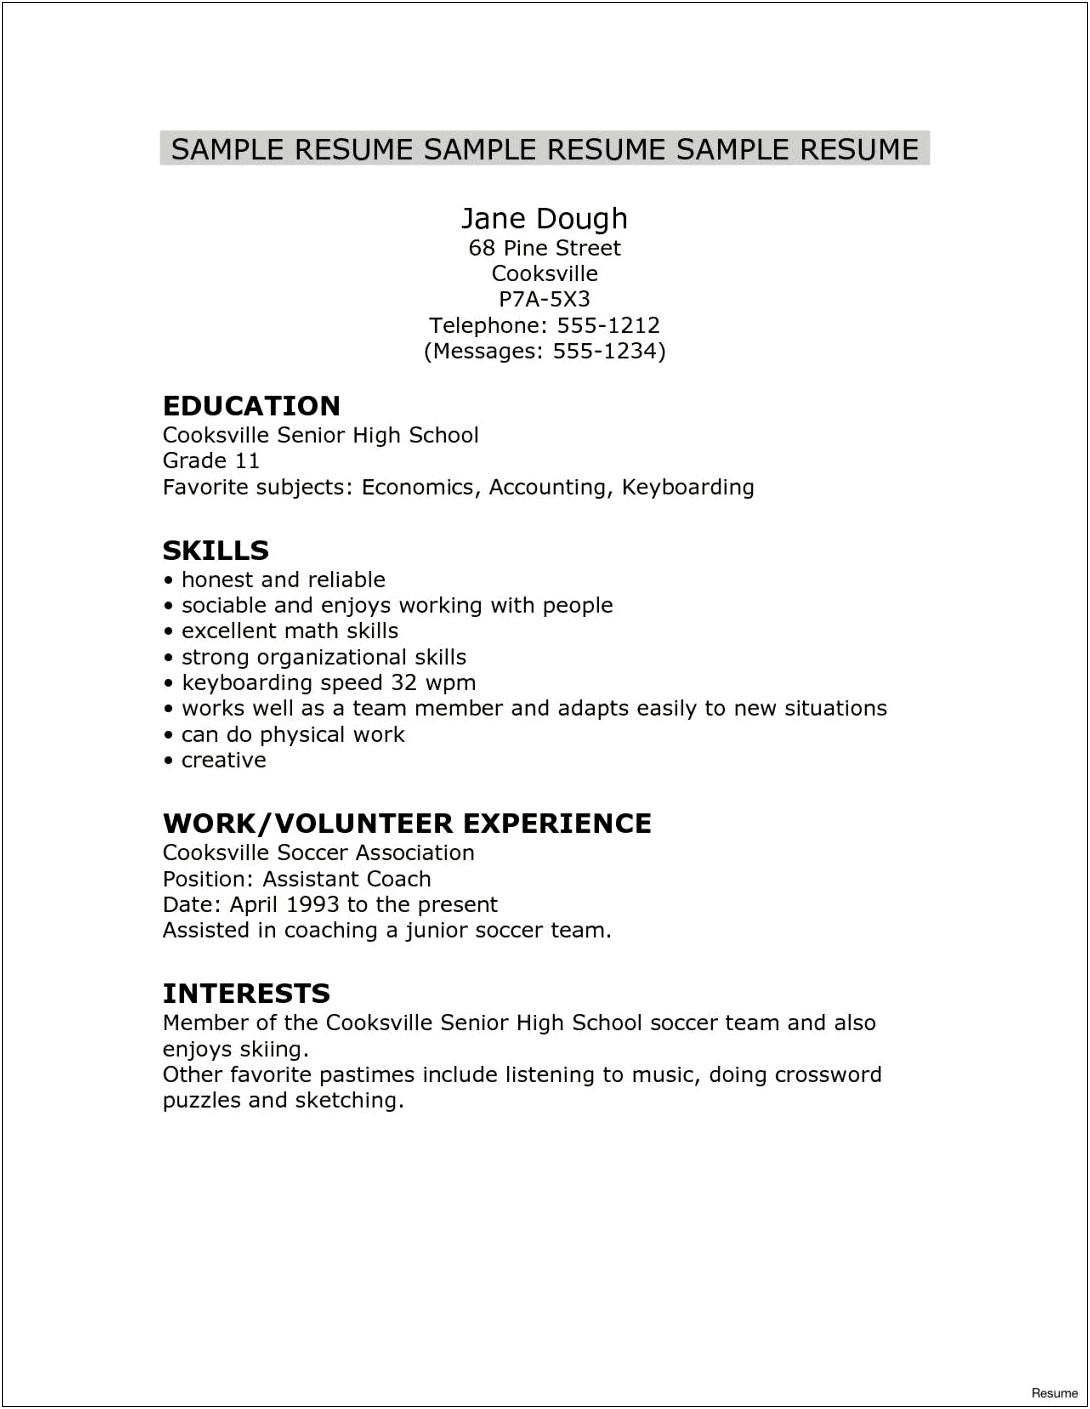 Best Resume For Highschool Graduate